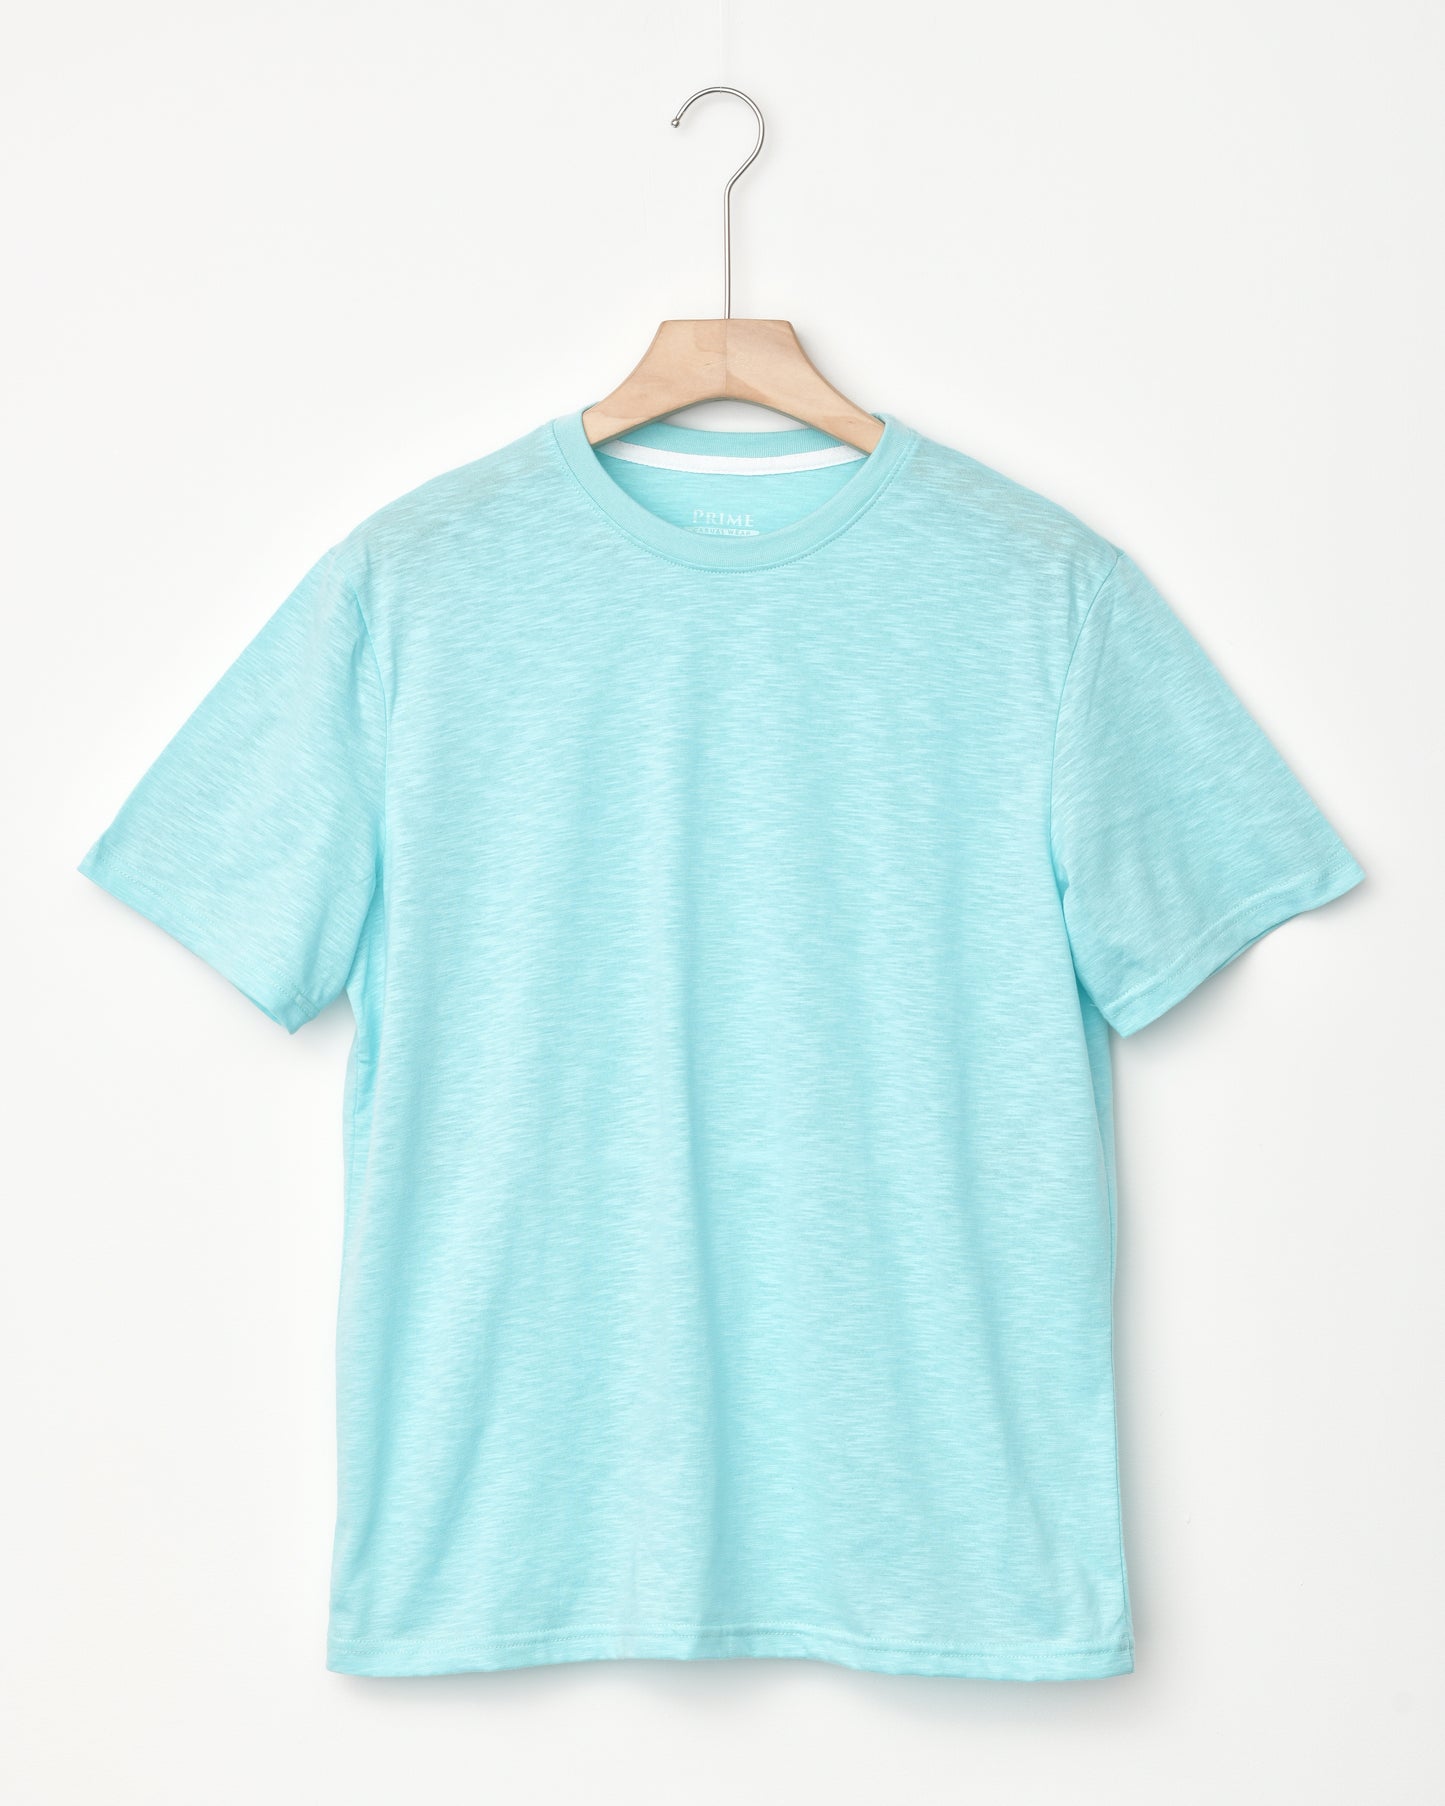 Blue unisex t-shirt